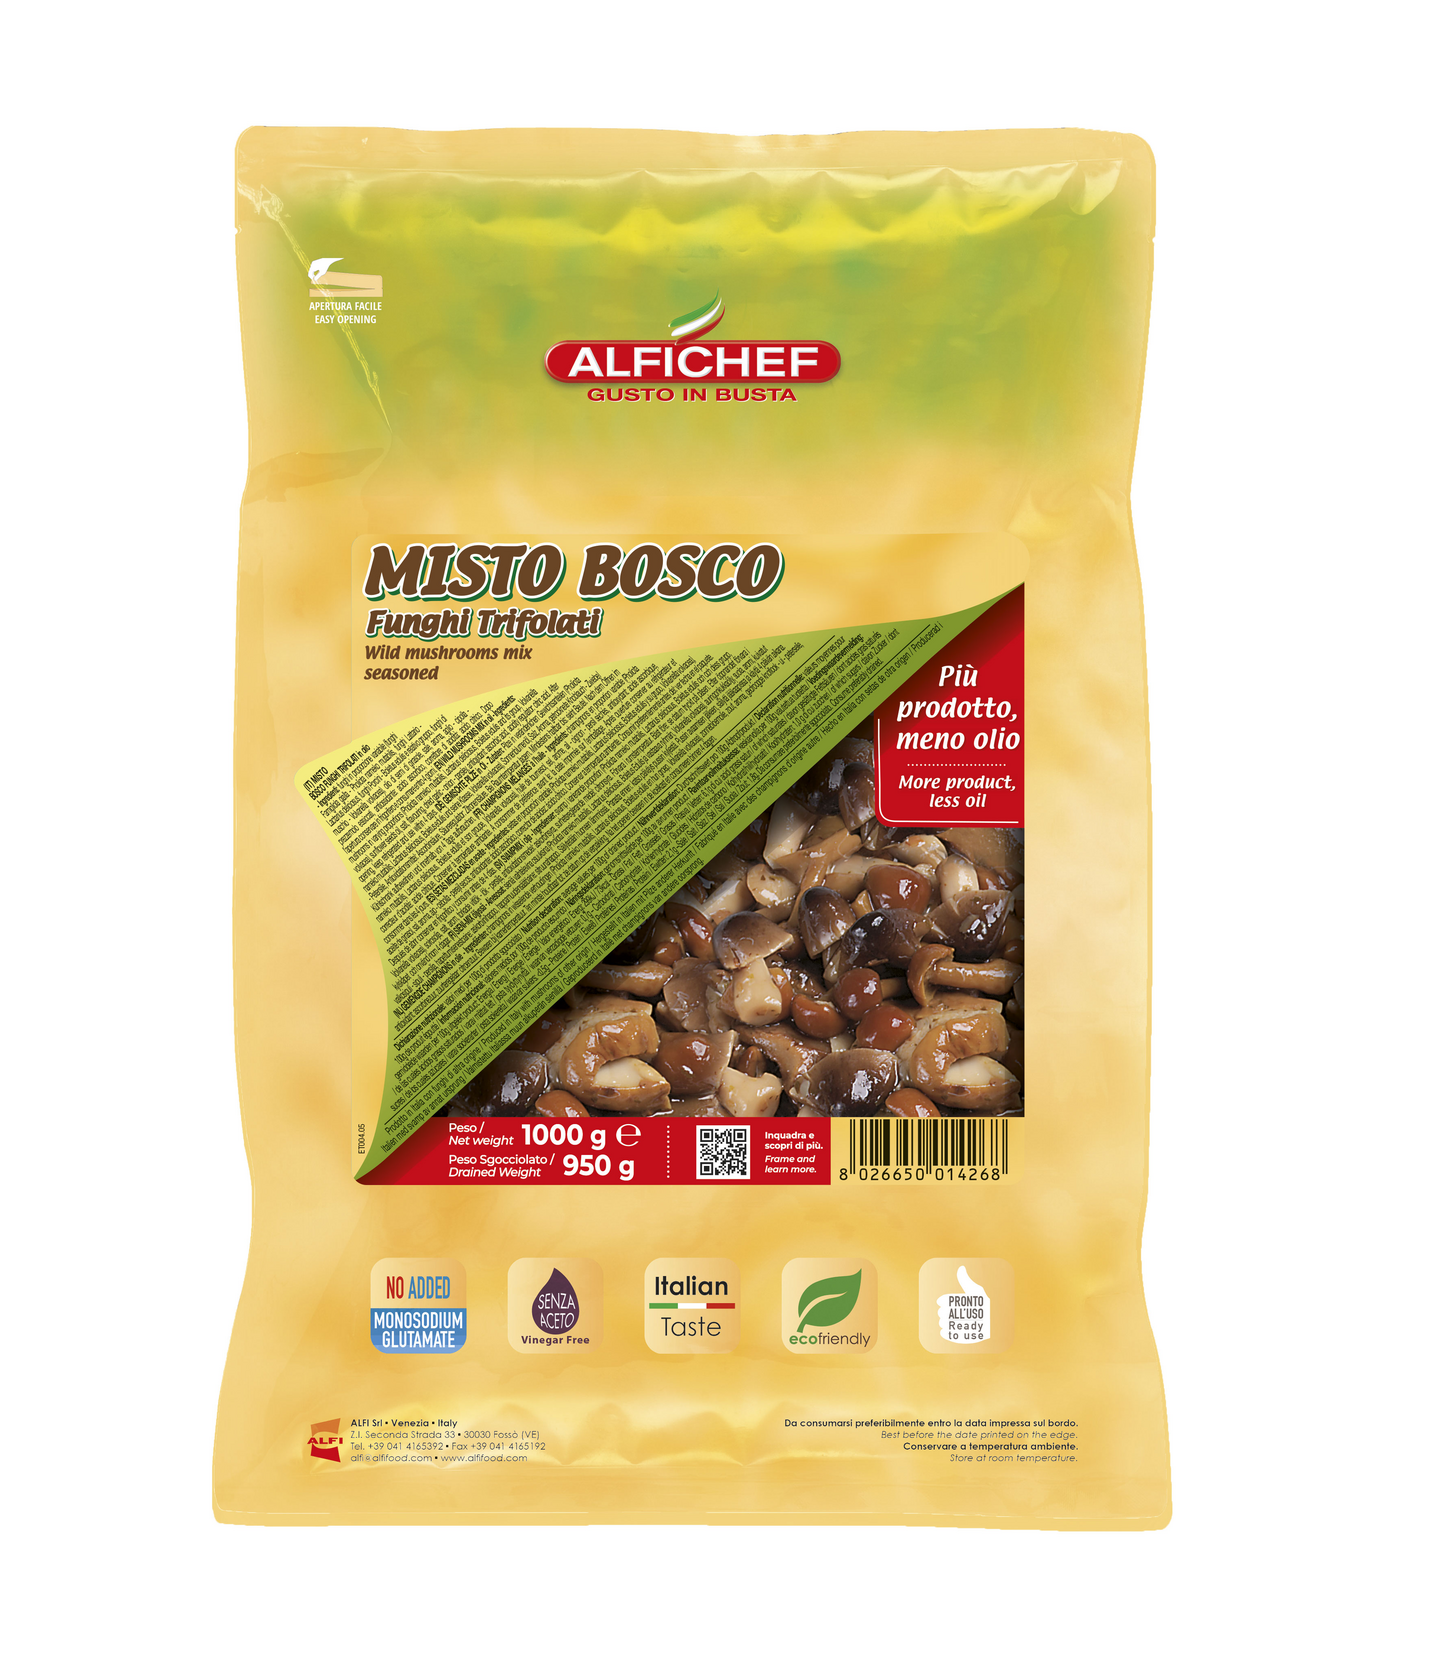 Alfichef Sienilajitelma Misto Bosco 1000g/950g säilykepussi